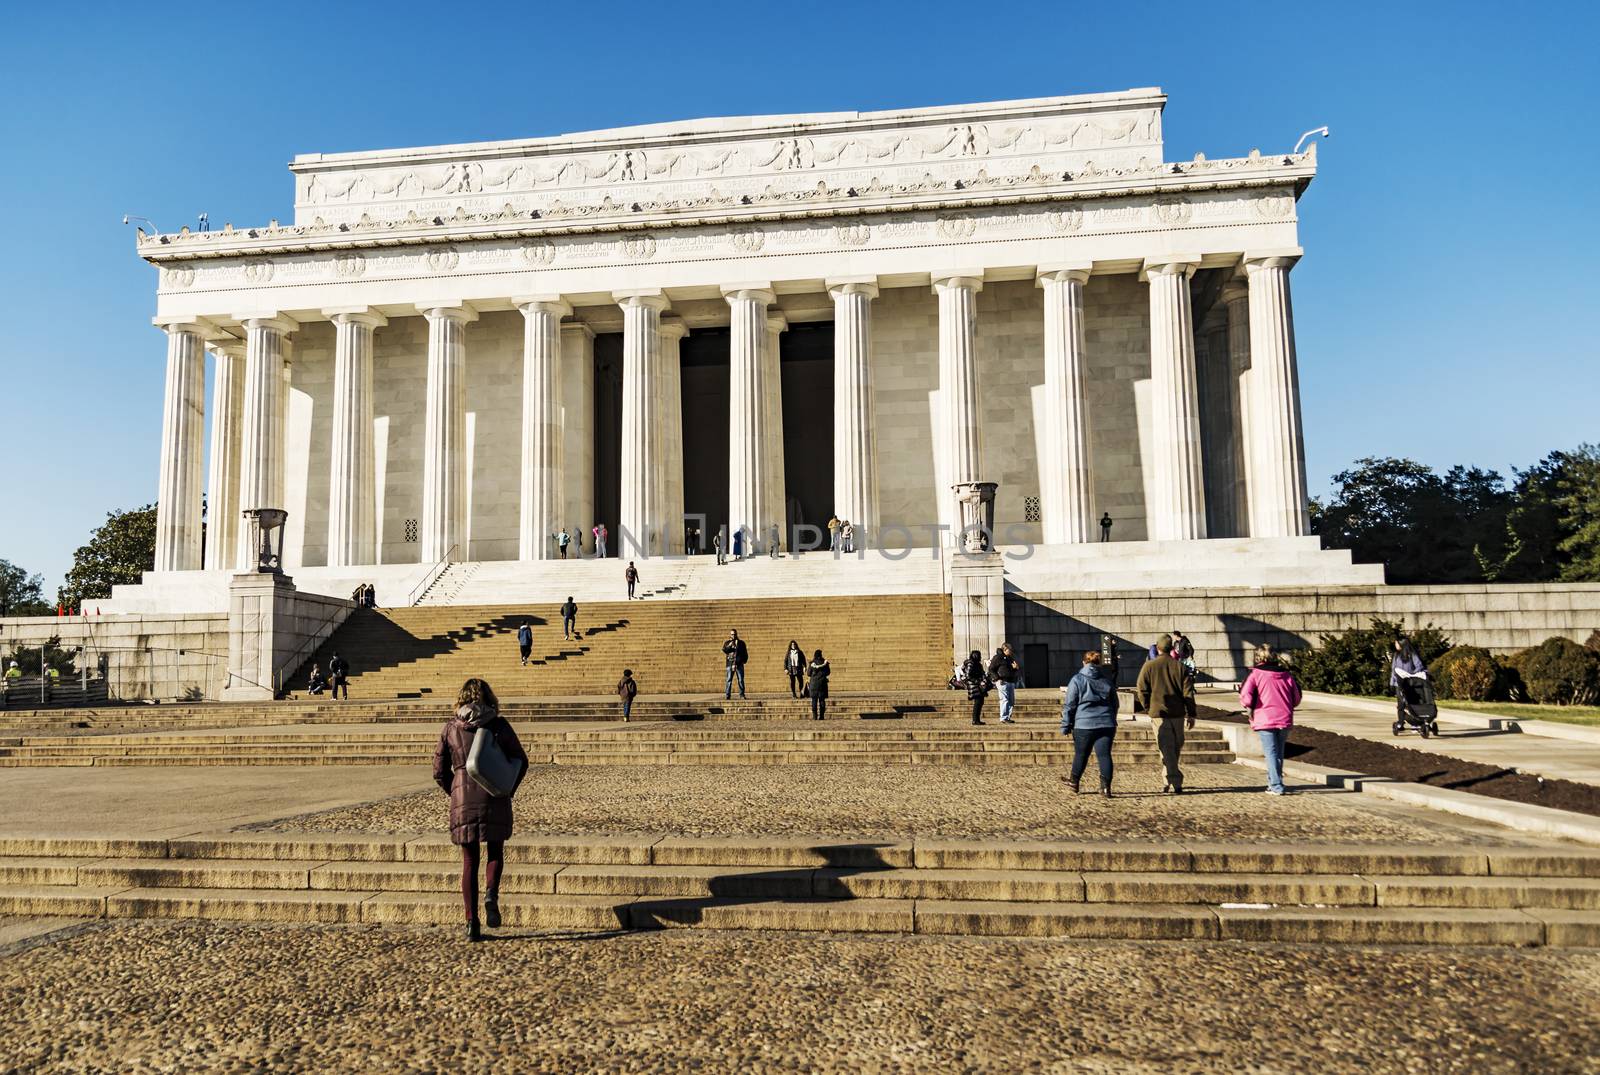 The Lincoln Memorial in Washington, DC. by edella